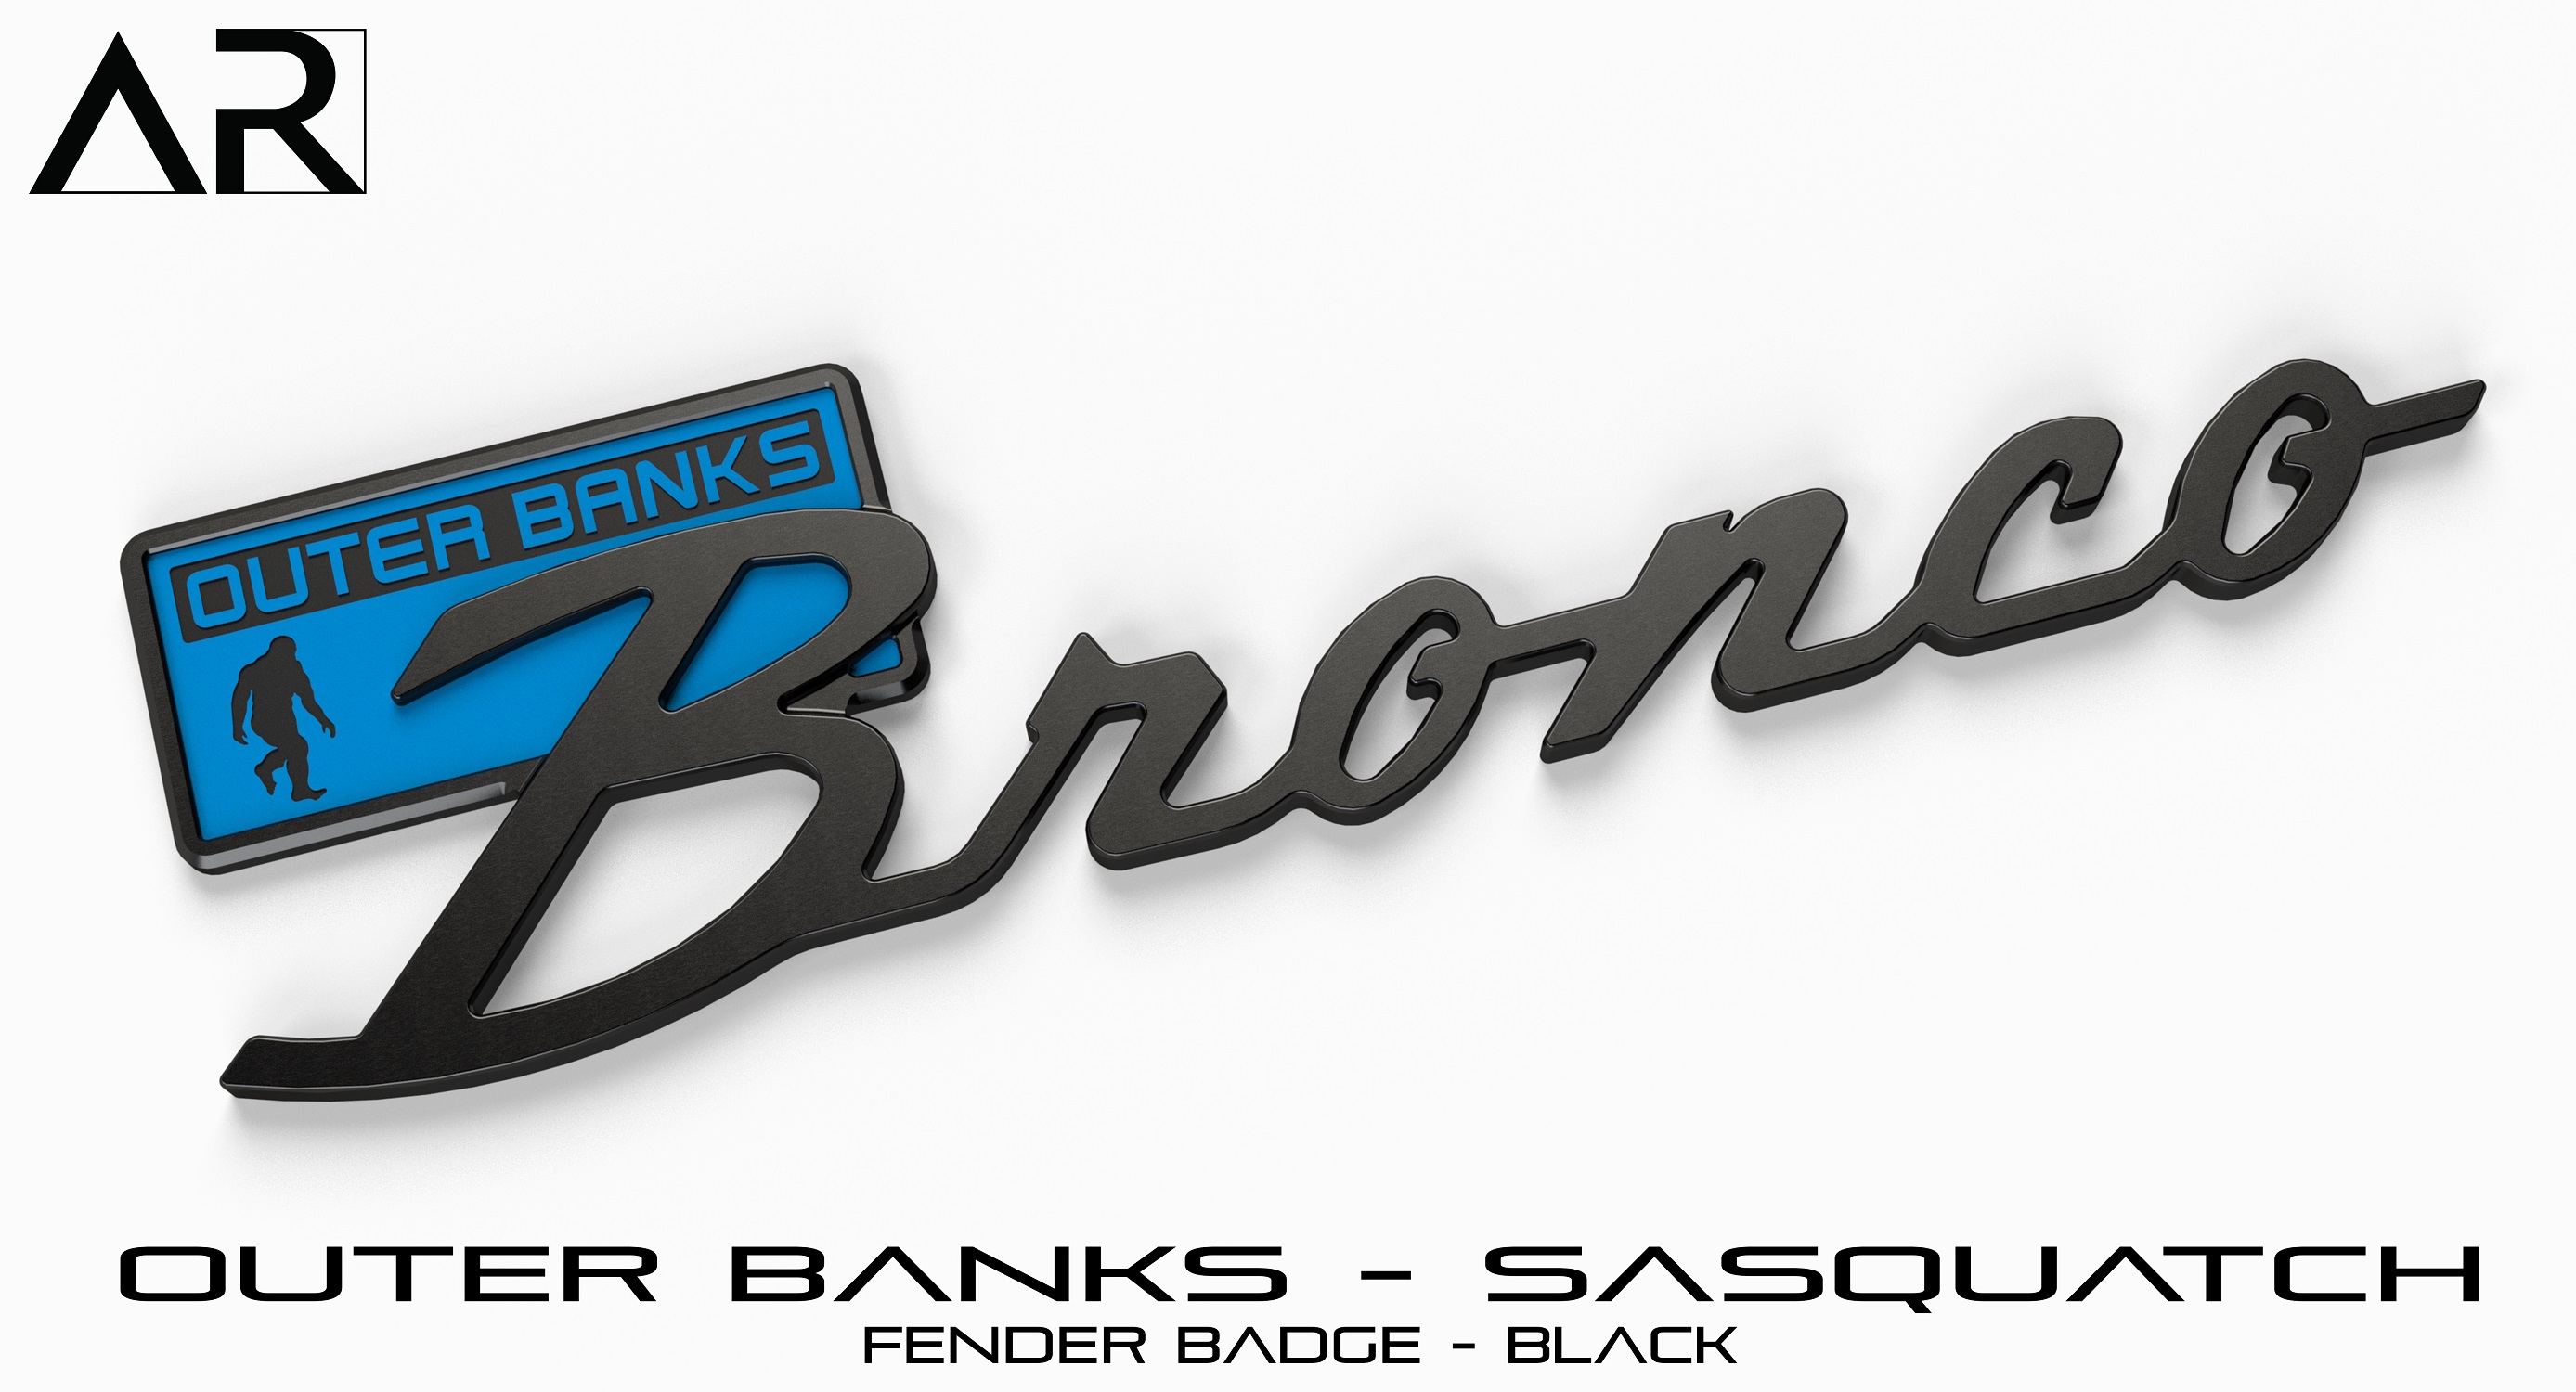 Ford Bronco AR | BRONCO CLASSIC DNA Fender Badge 1601006_S  - Fender Badge  - Outer Banks Sasquatch - Black